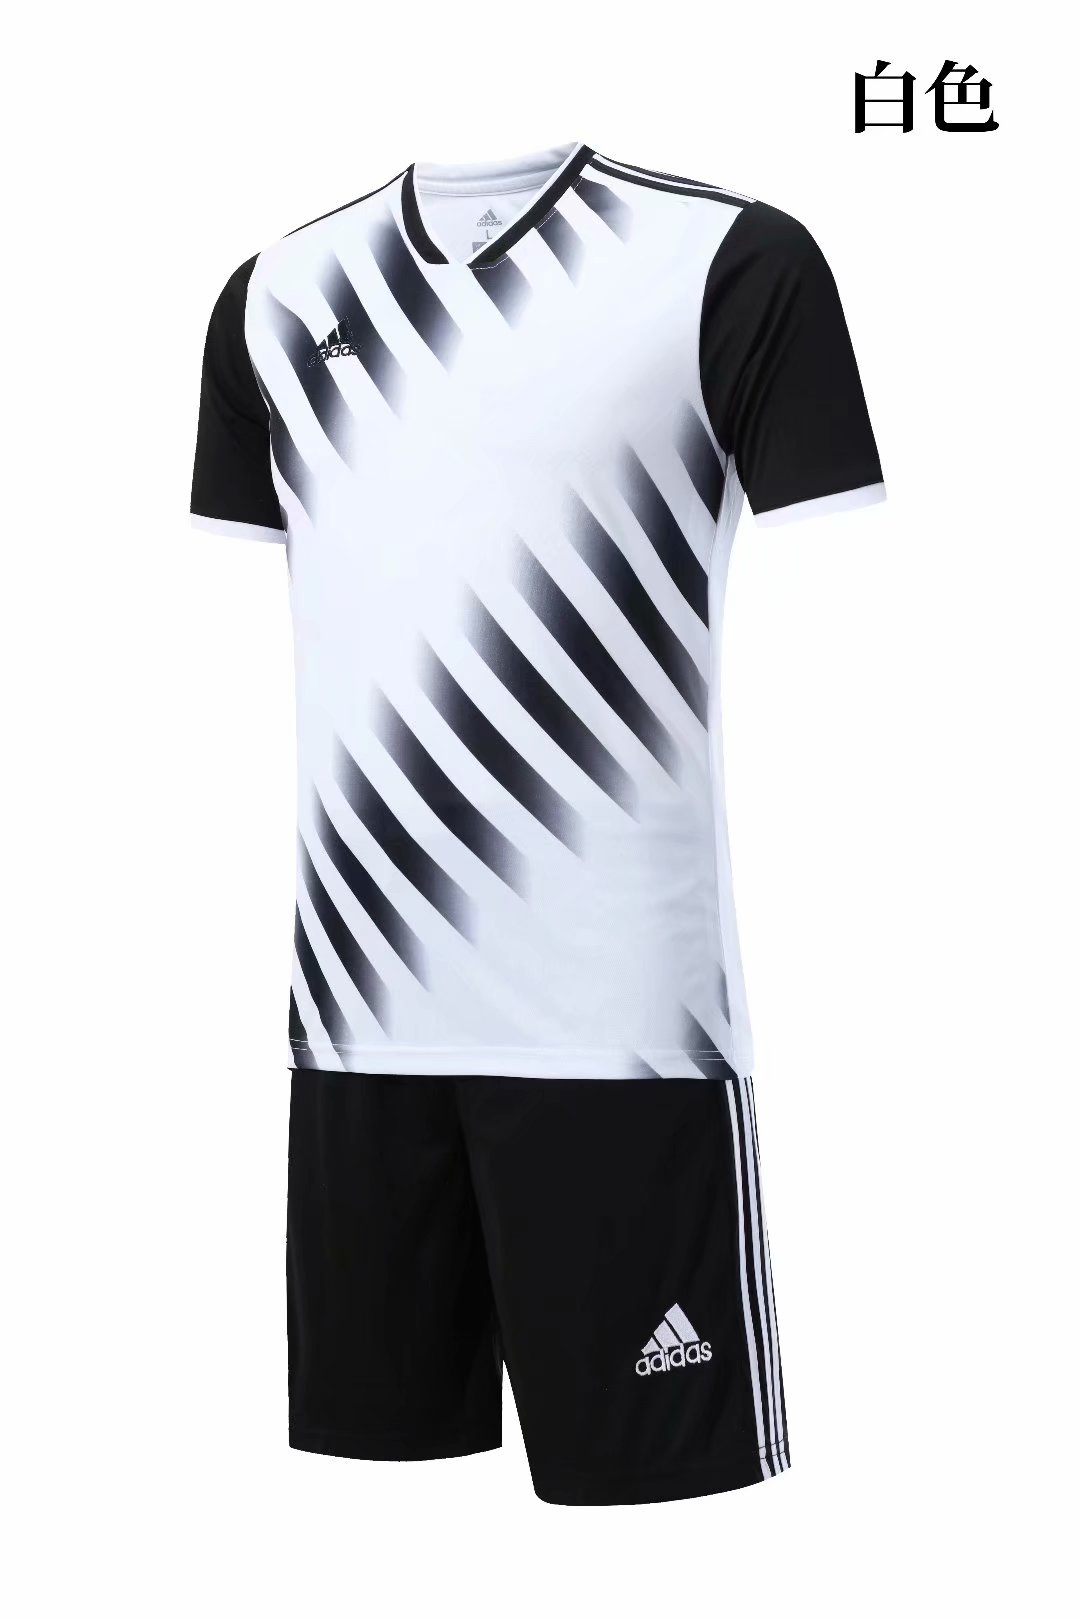 Adidas Soccer Team Uniforms 019